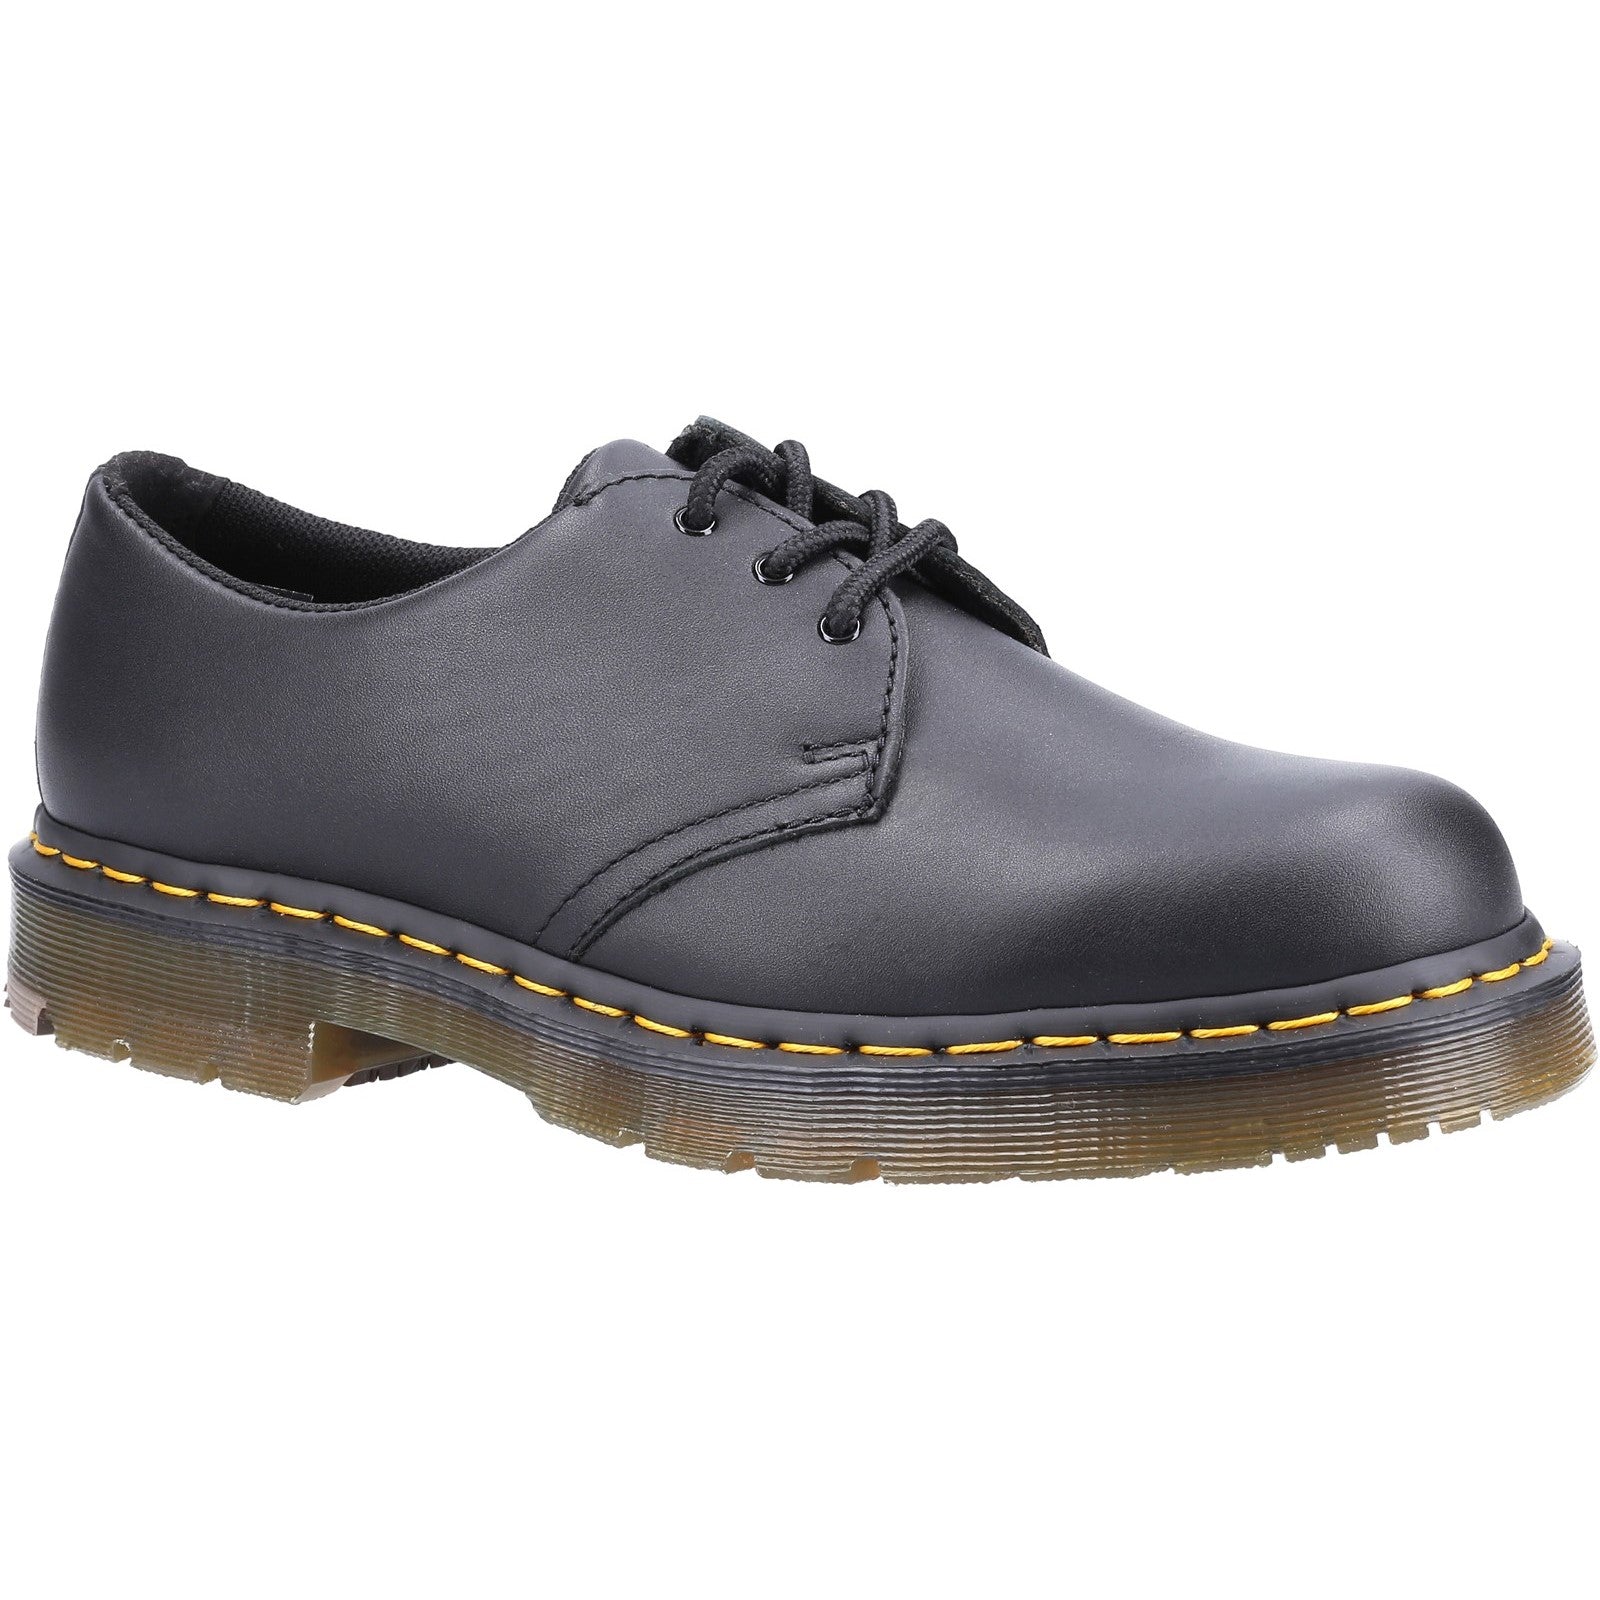 Dr. Martens 1461 Slip Resistant Leather Shoes